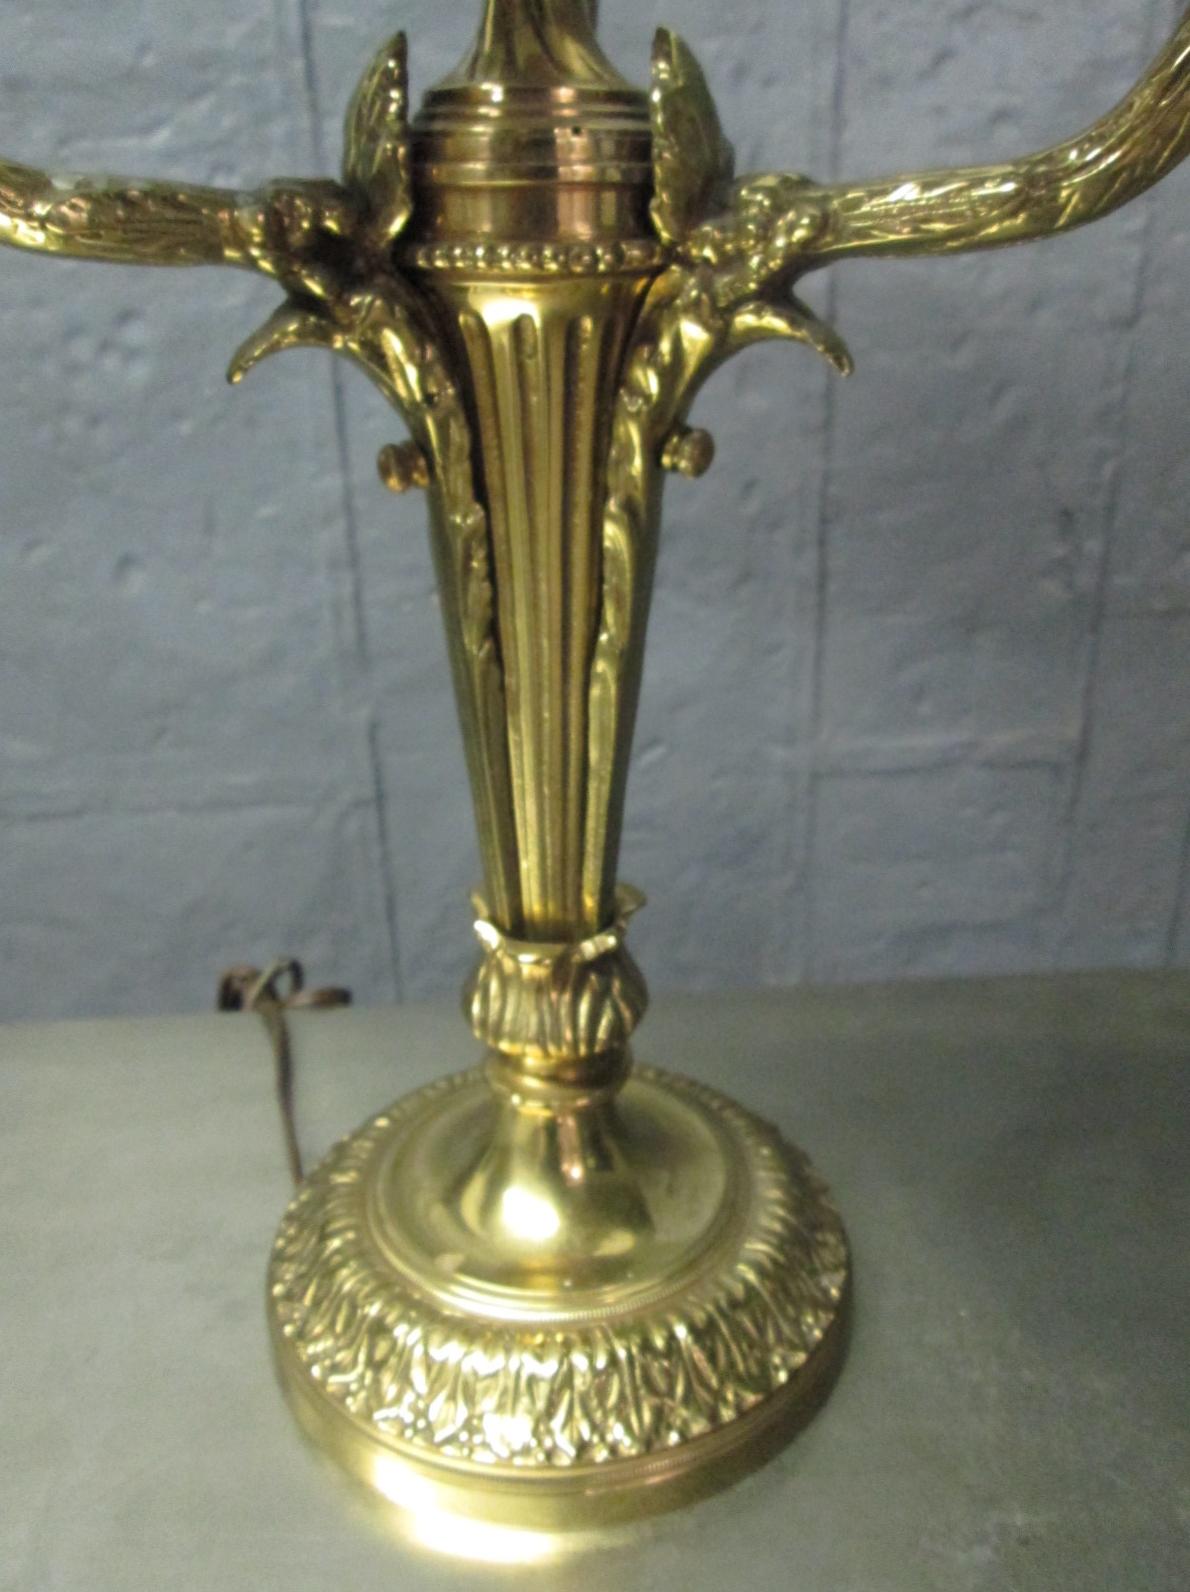 Floral bronze lamp by Warren Kessler.
Shade not included.
Measures: 29.5